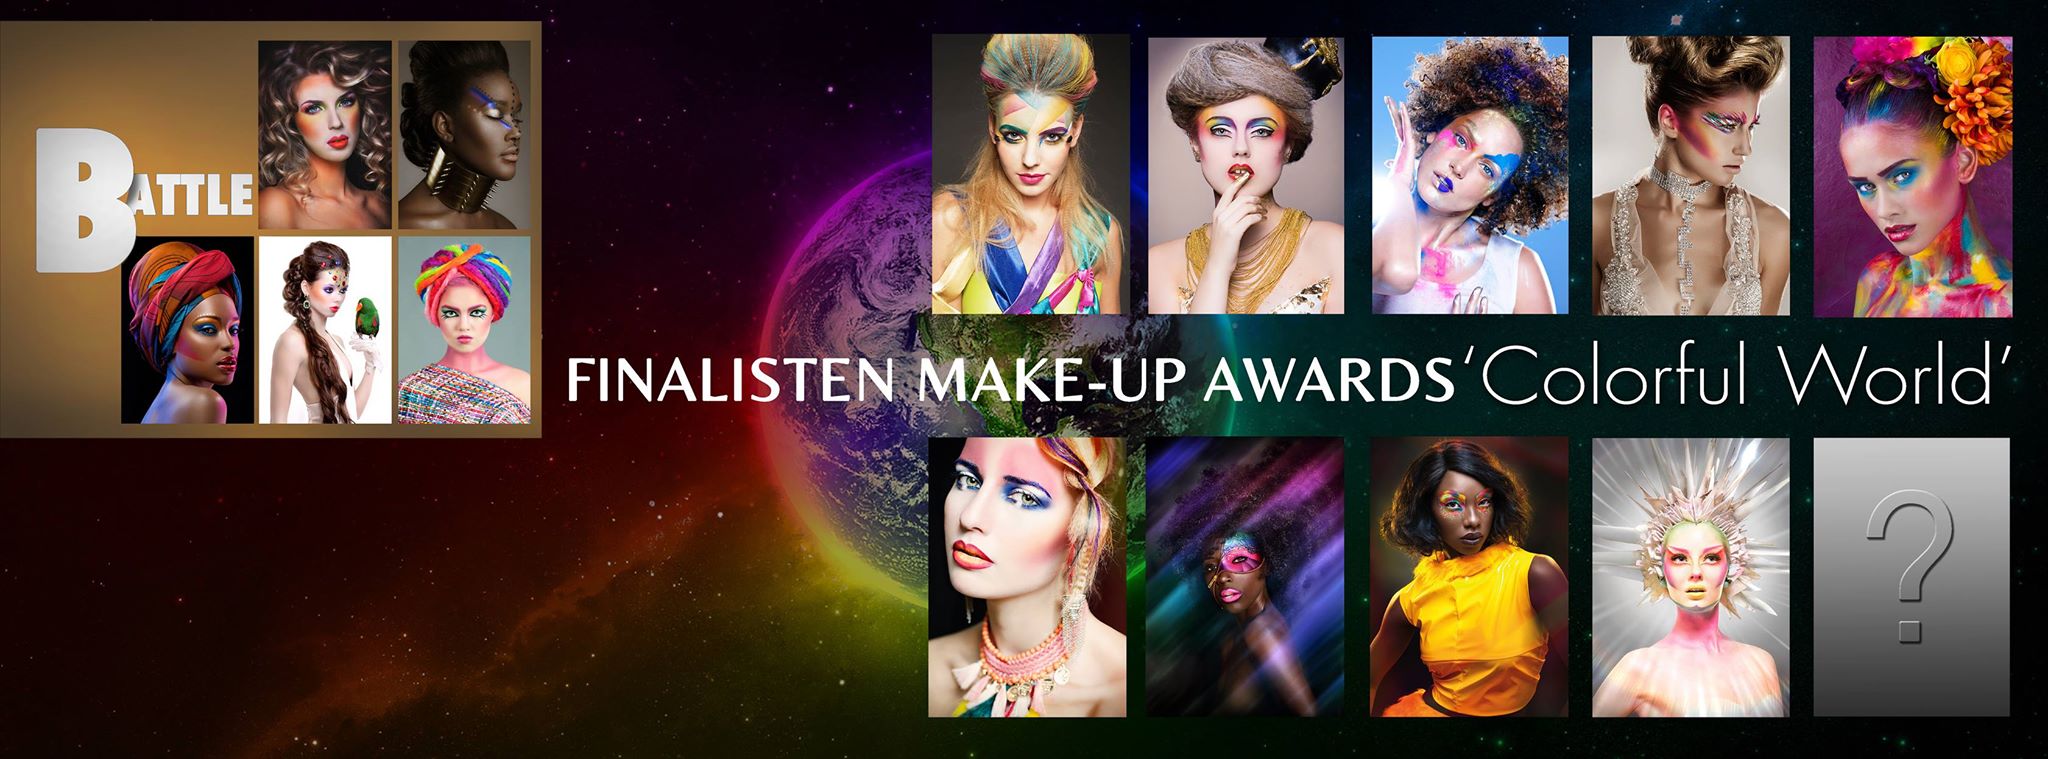 Make up Awards fotoshoot